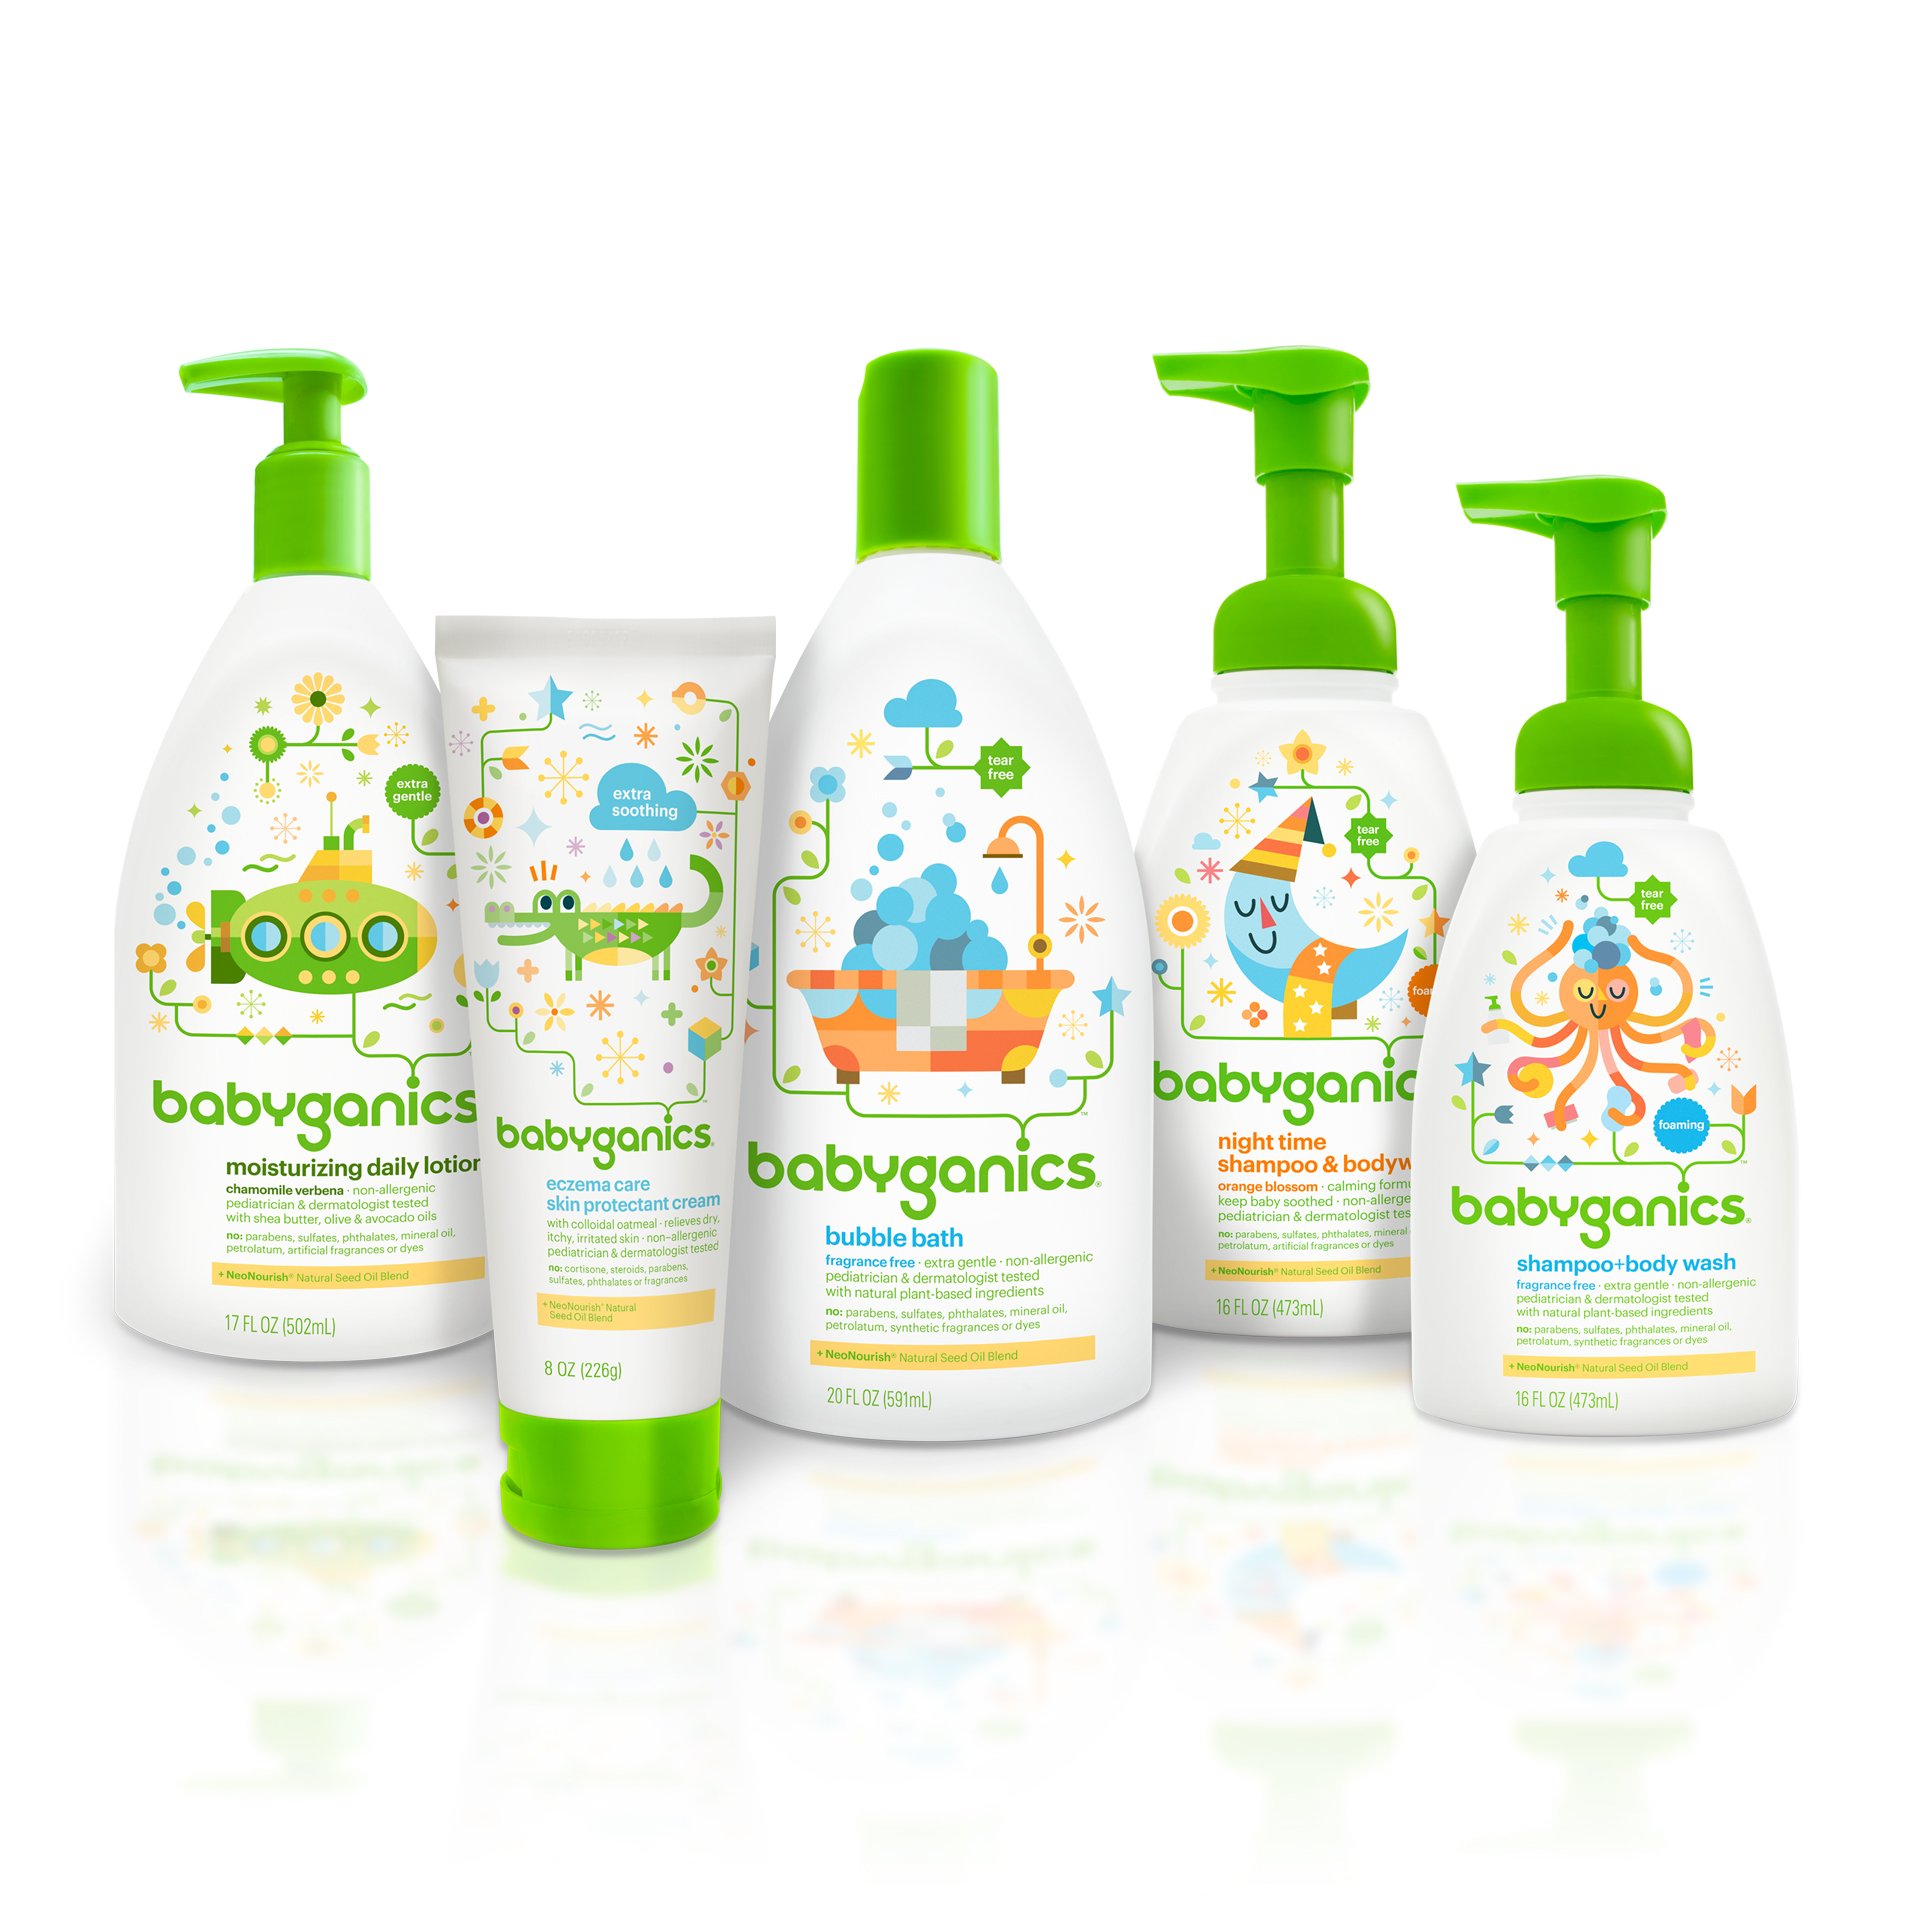 babyganics shampoo and body wash review